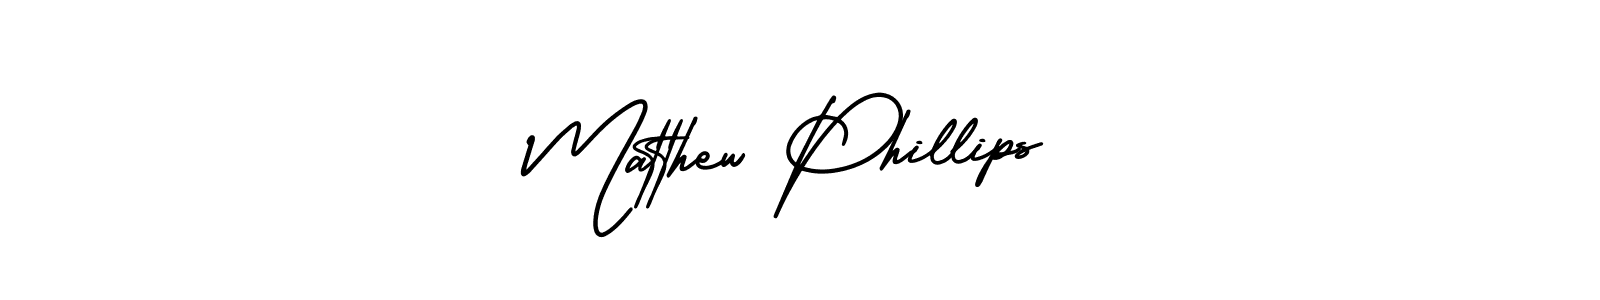 How to Draw Matthew Phillips signature style? AmerikaSignatureDemo-Regular is a latest design signature styles for name Matthew Phillips. Matthew Phillips signature style 3 images and pictures png